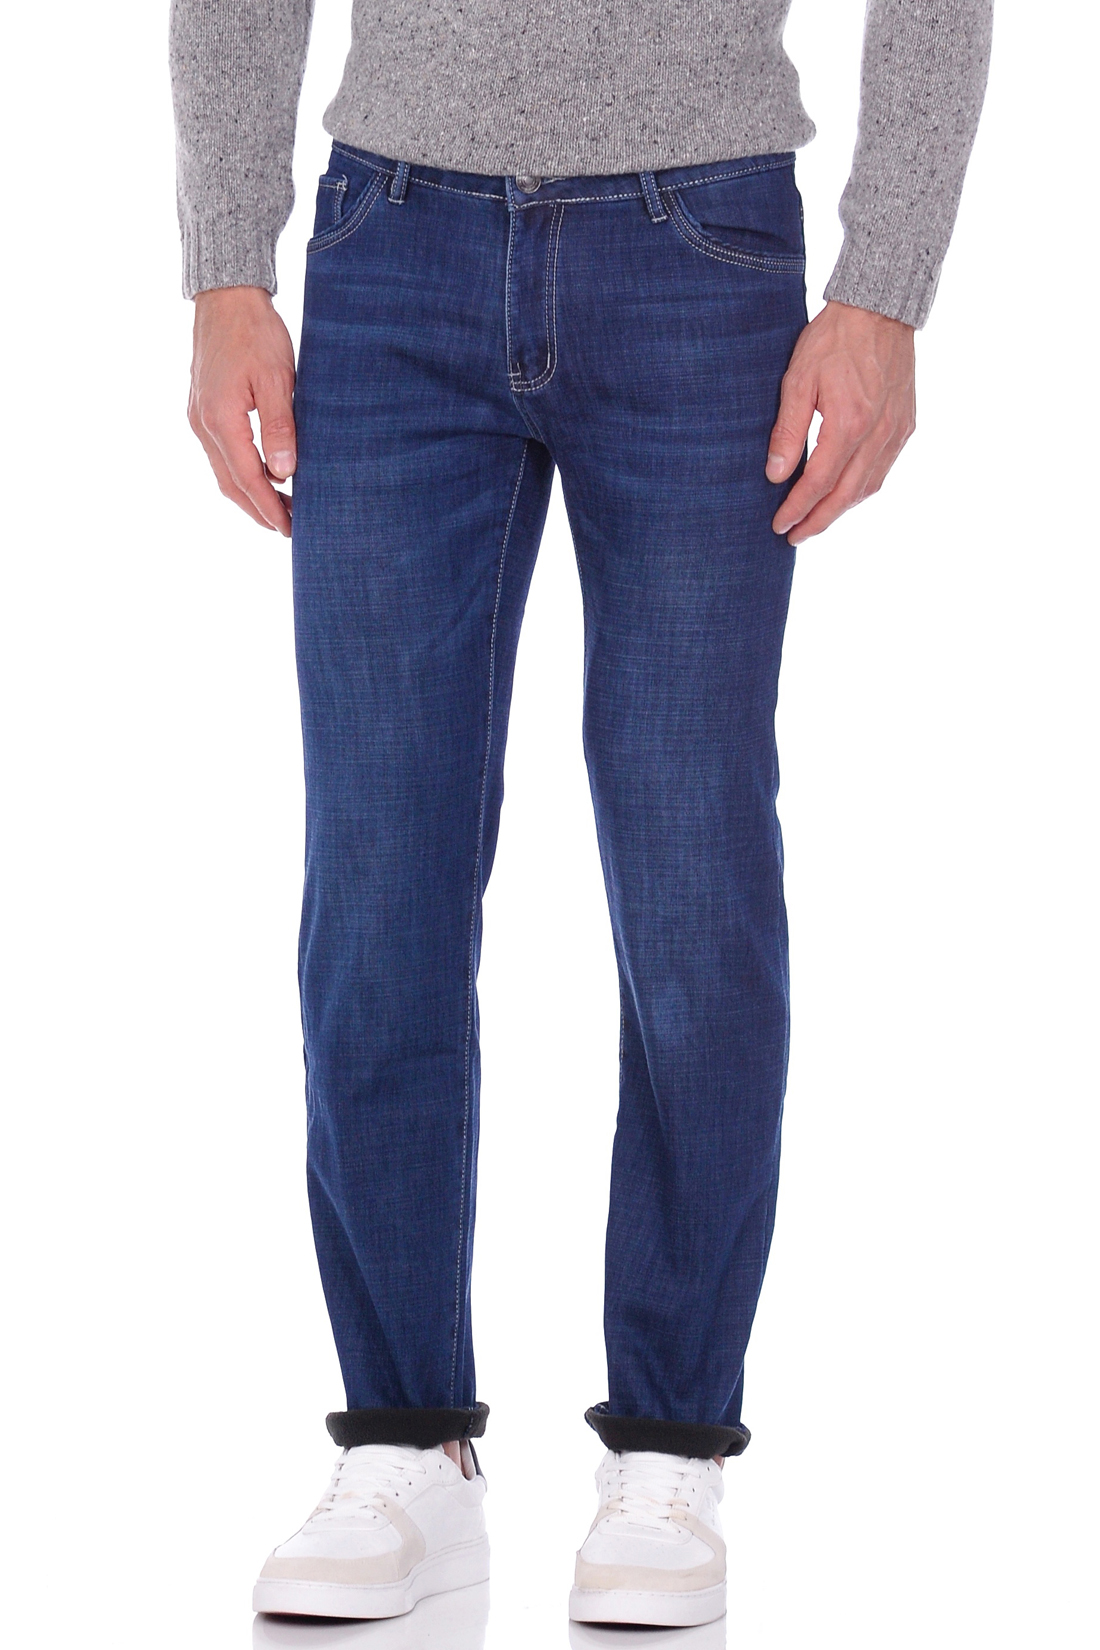 Утеплённые джинсы (арт. baon B809502), размер 38, цвет dark blue denim#синий